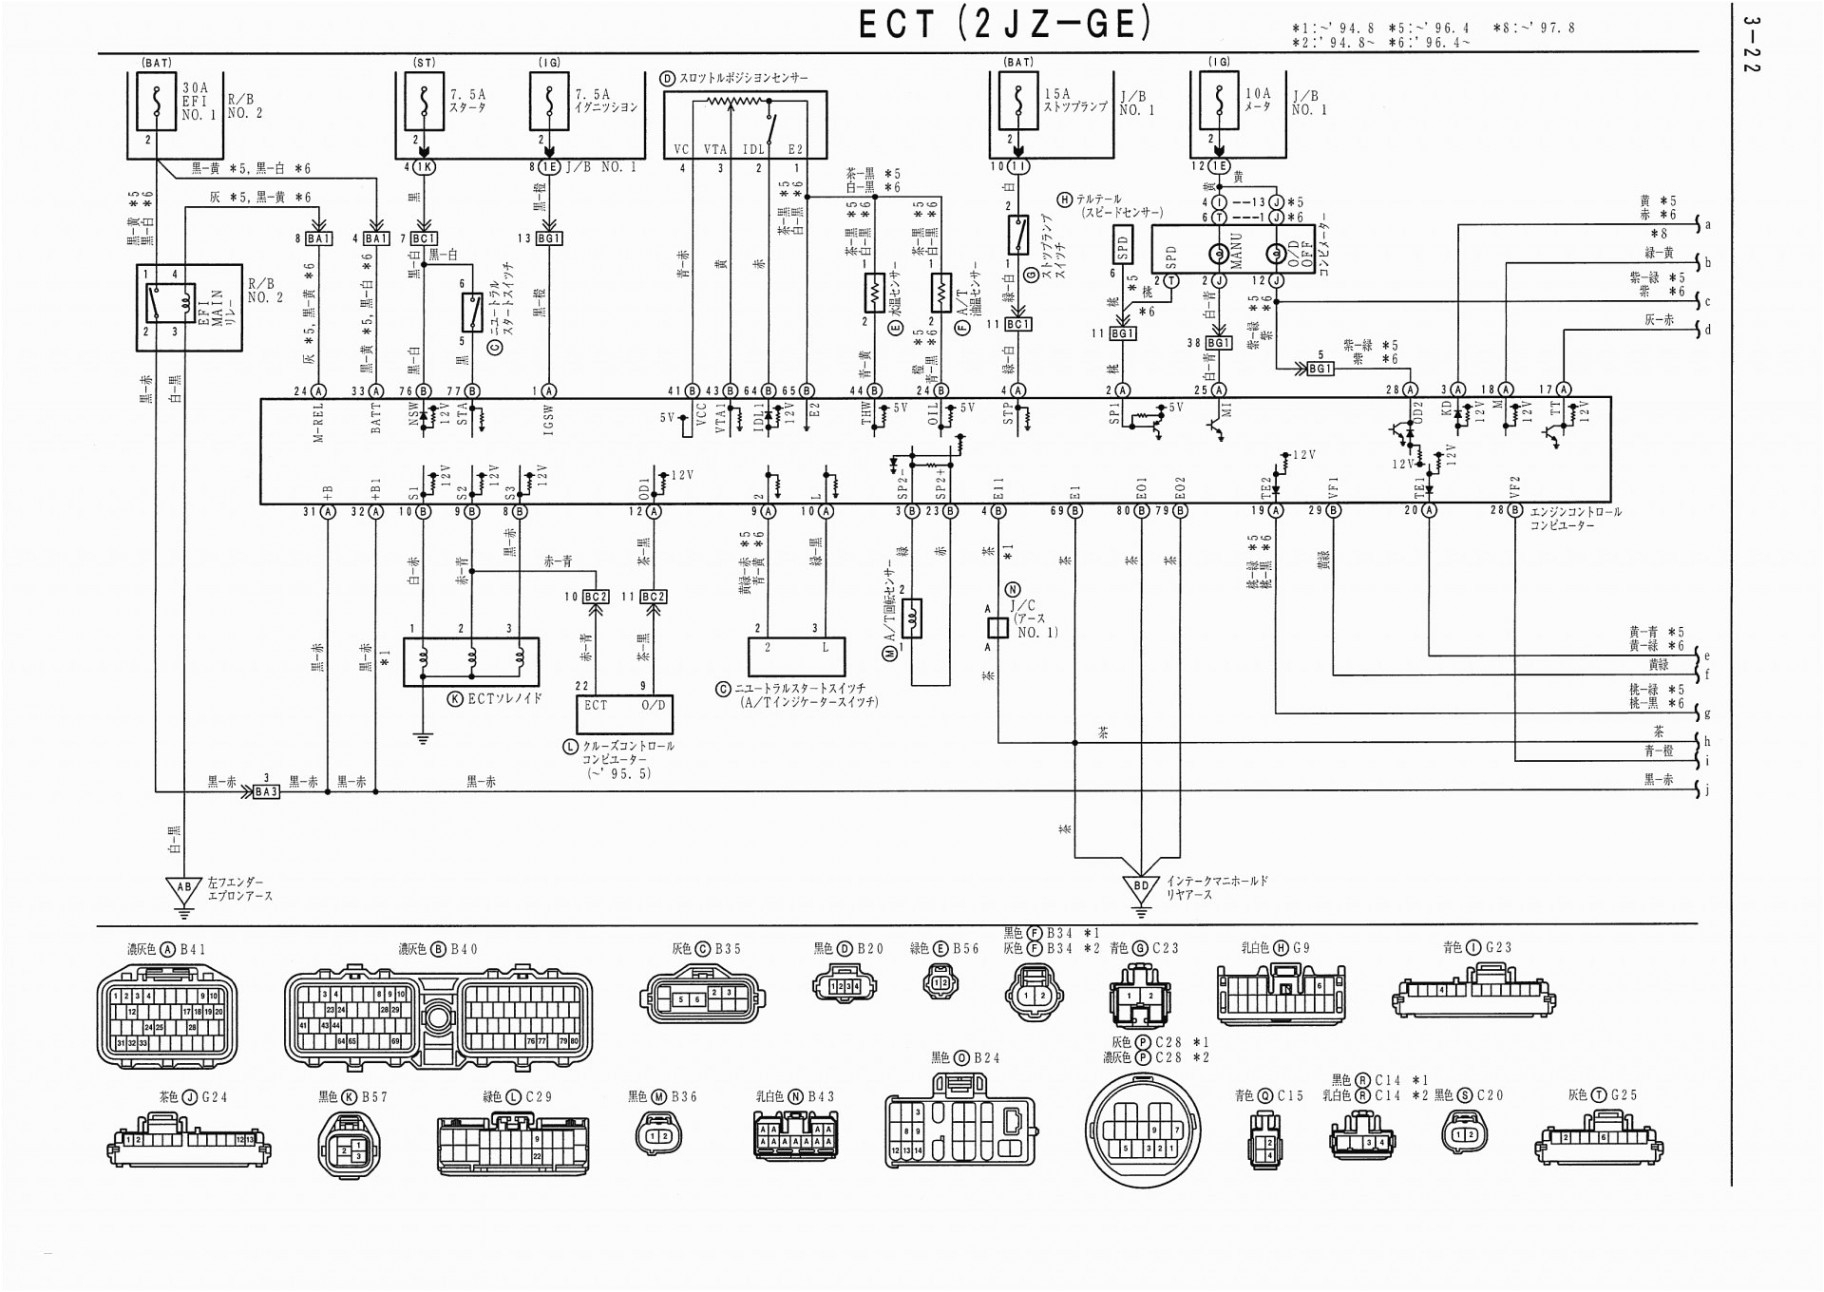 Wiring A Switch Diagram Electrical Wiring Diagram Free Wiring Diagram